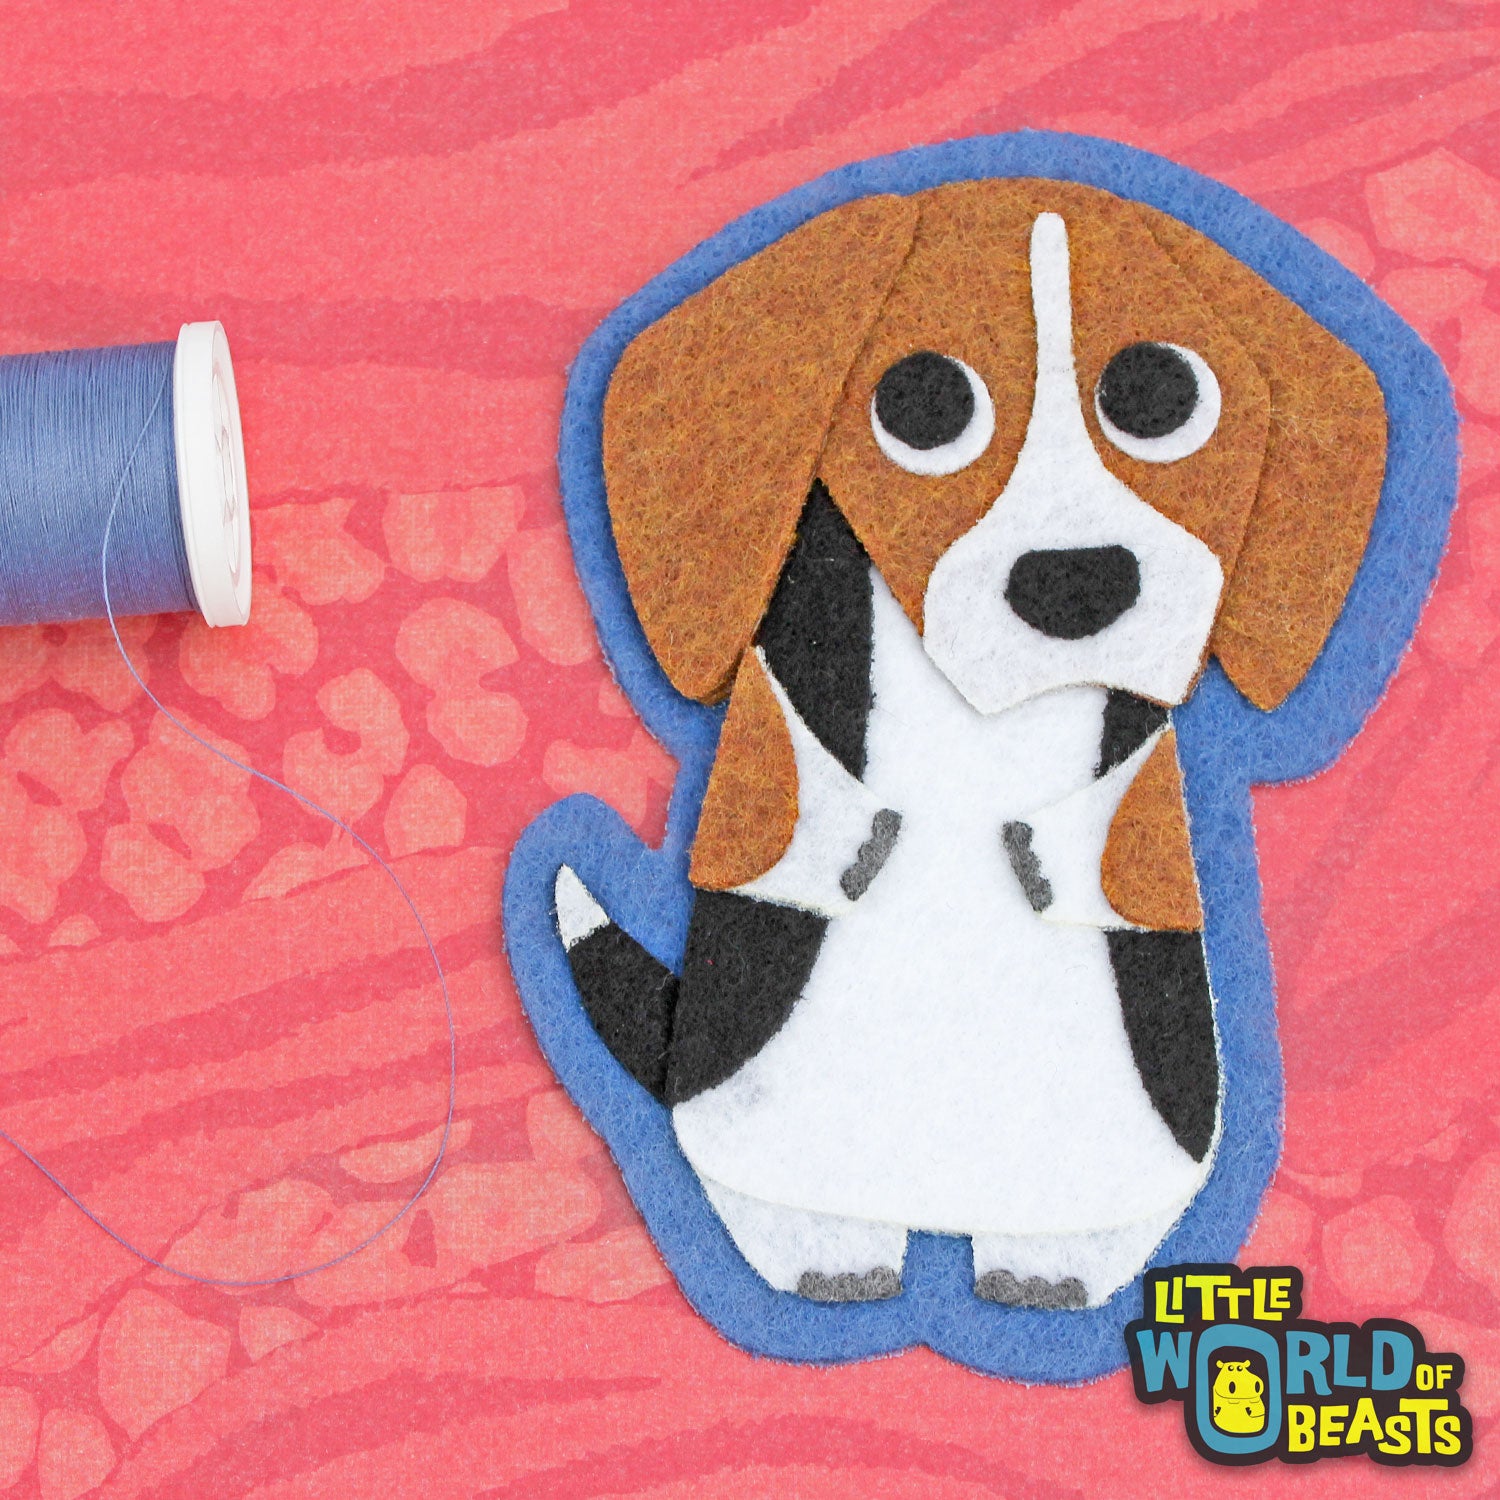 Barclay the Beagle - Felt Patch - Dog Applique